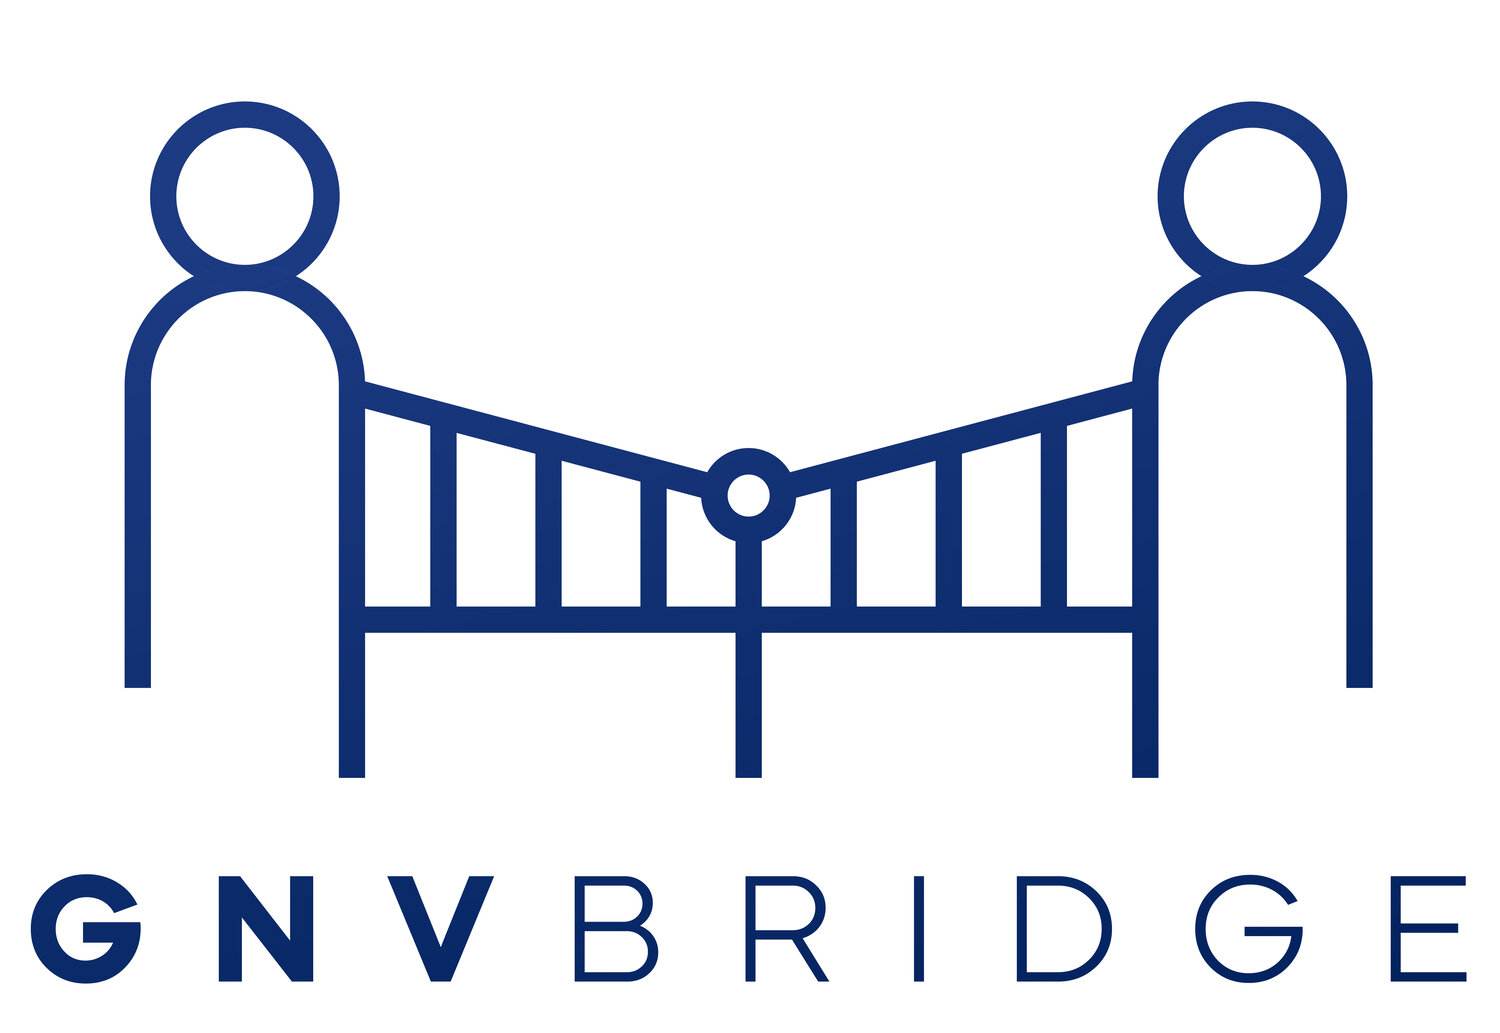 GNV Bridge